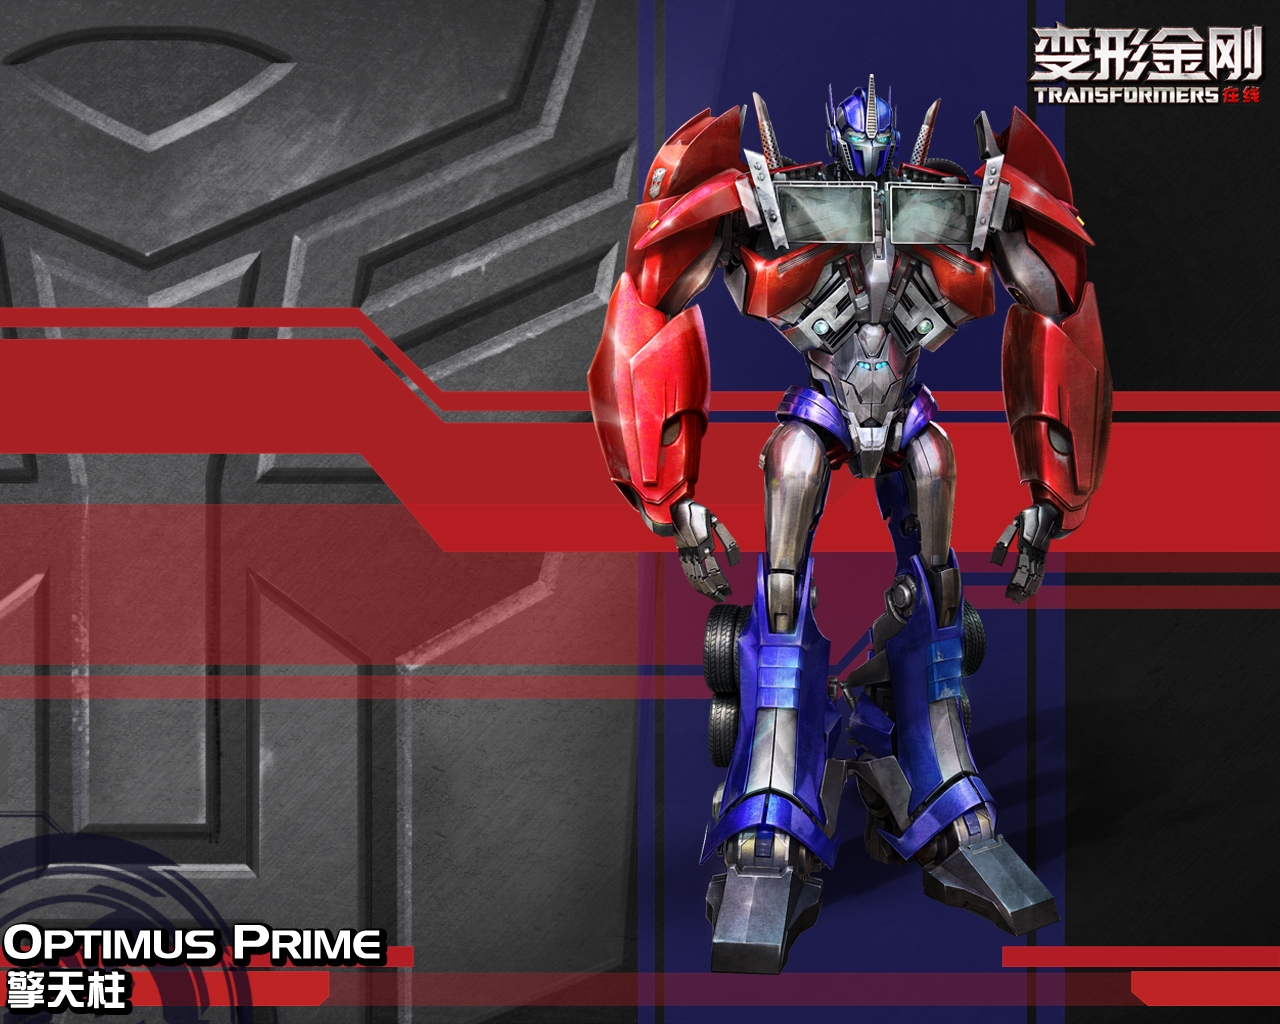 Transformers Prime   Transformers Prime Wallpaper 26745367 1280x1024